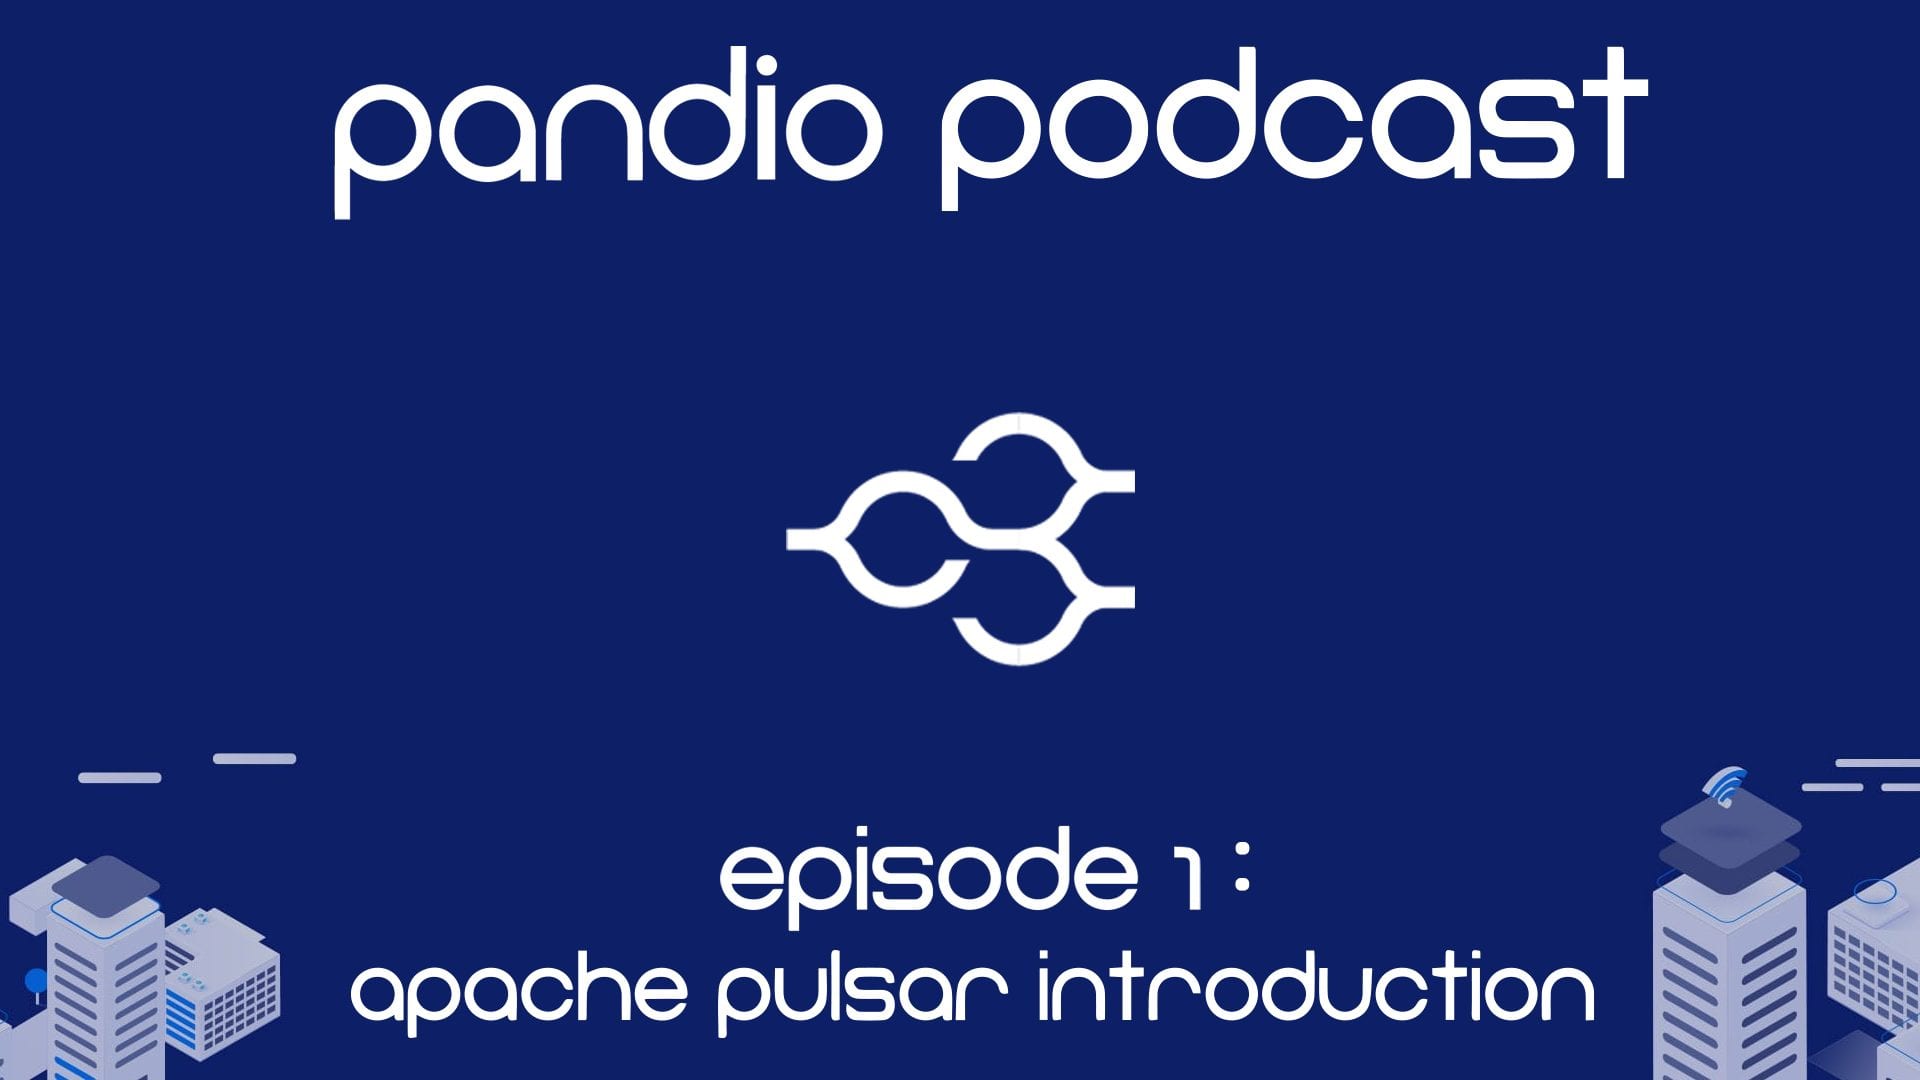 Pandio Podcast Episode 1 Image